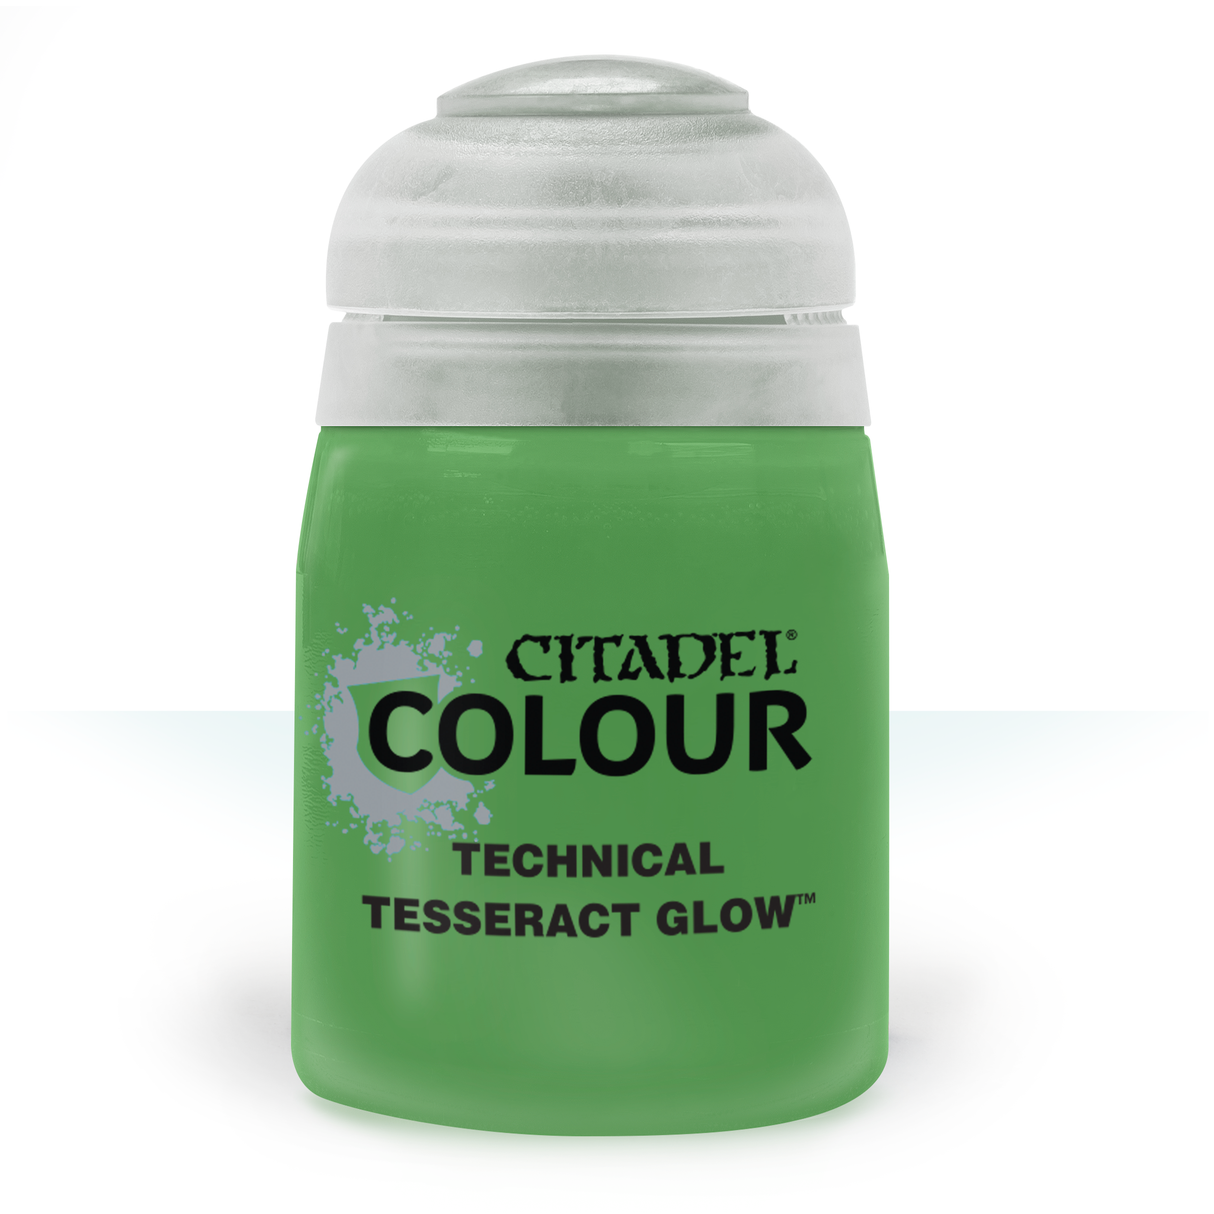 Techincal: Tesseract Glow